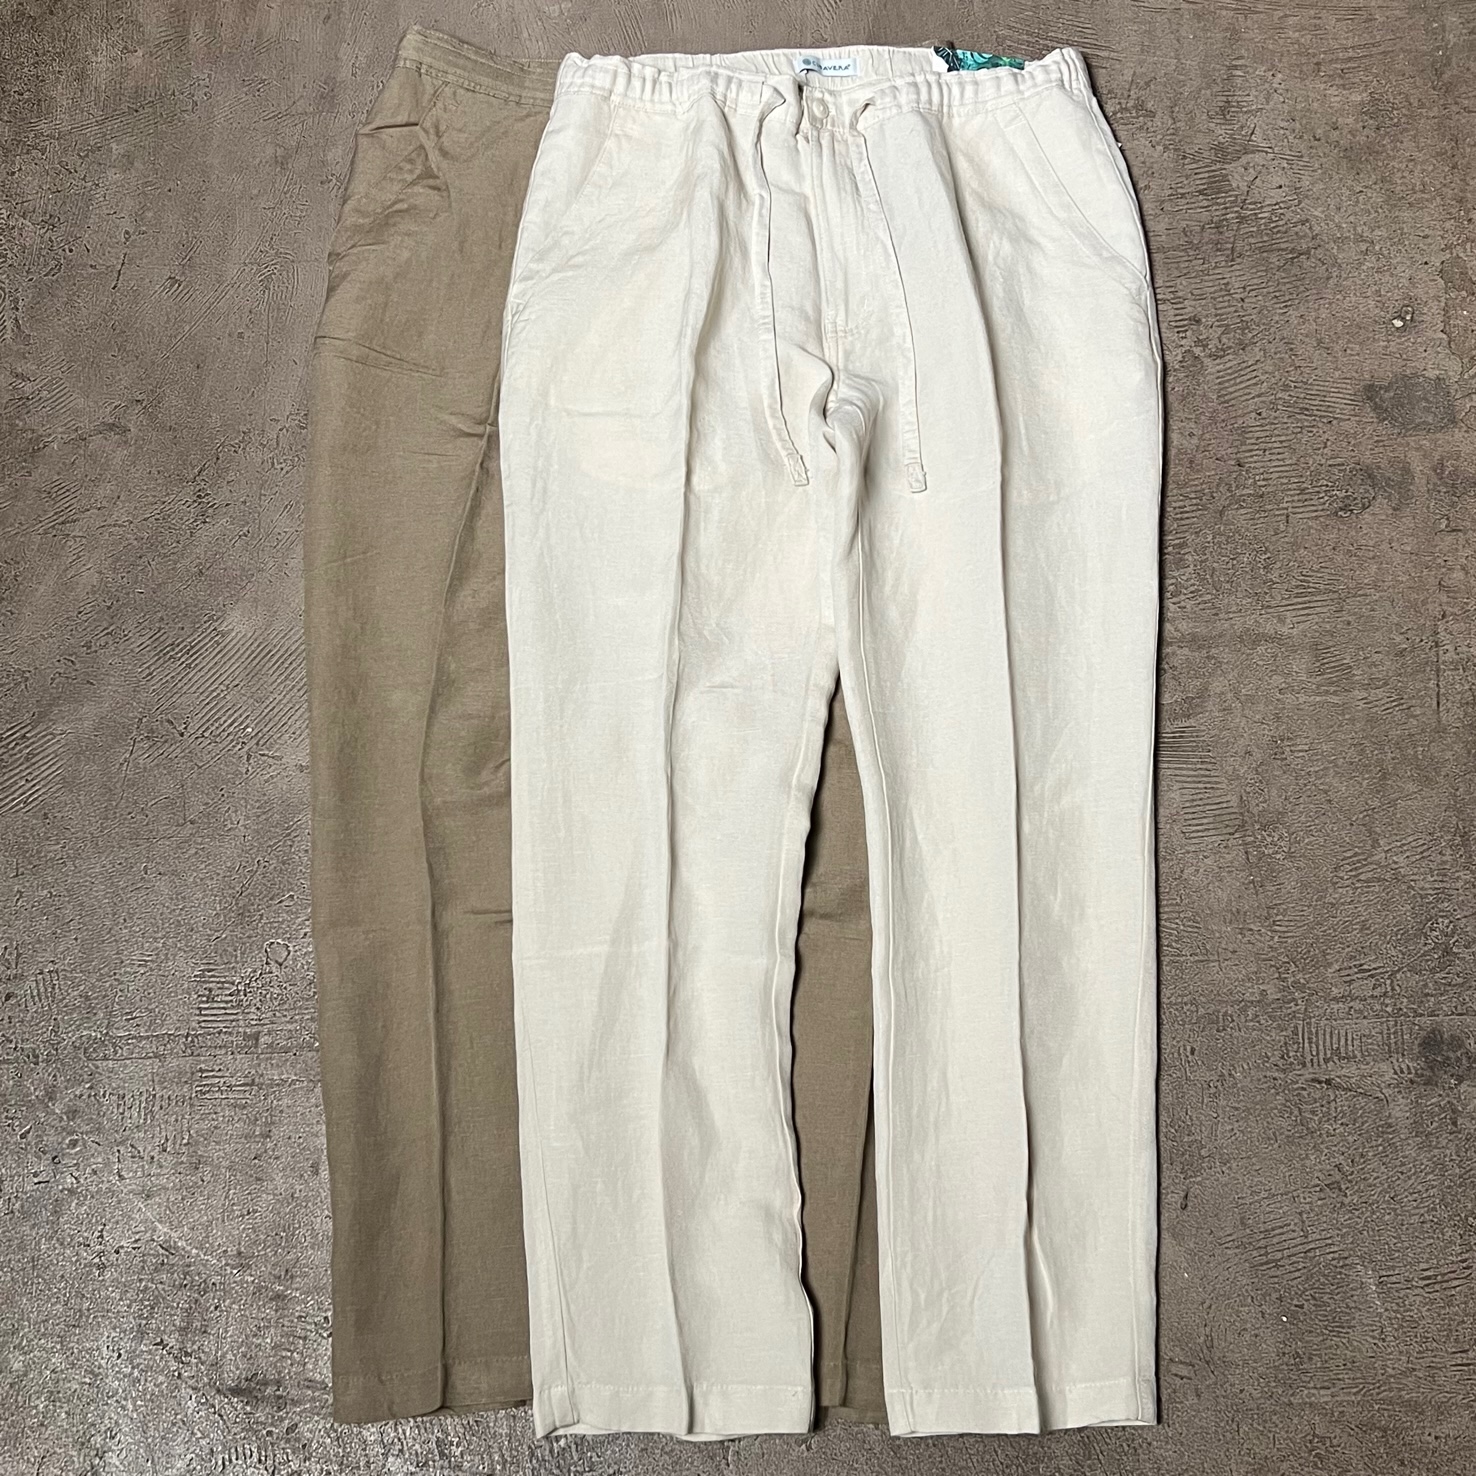 Linen-Blend Core Drawstring Pants